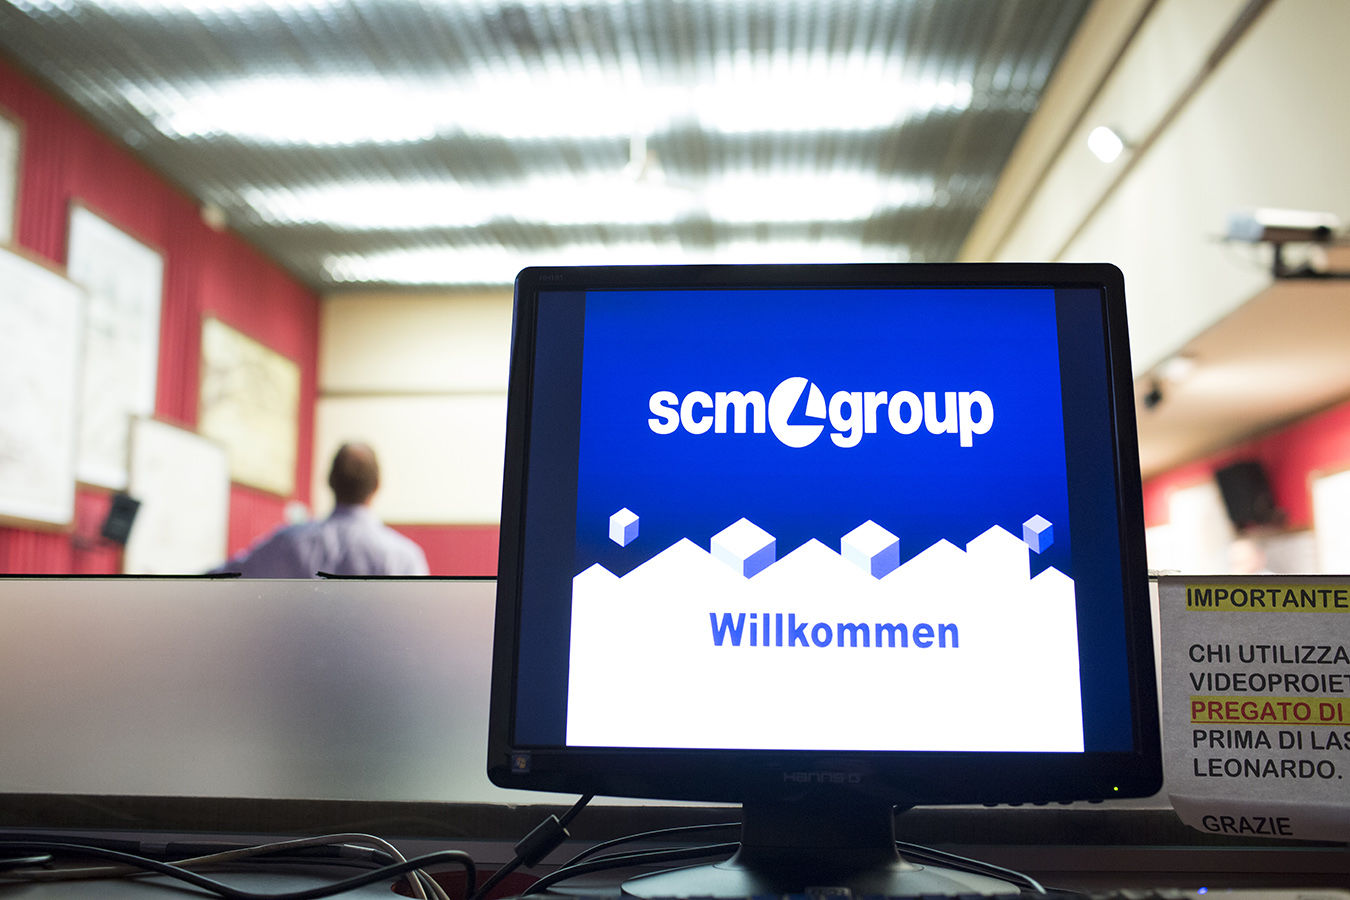 Deutsche Delegation @ the Scm Group HQ